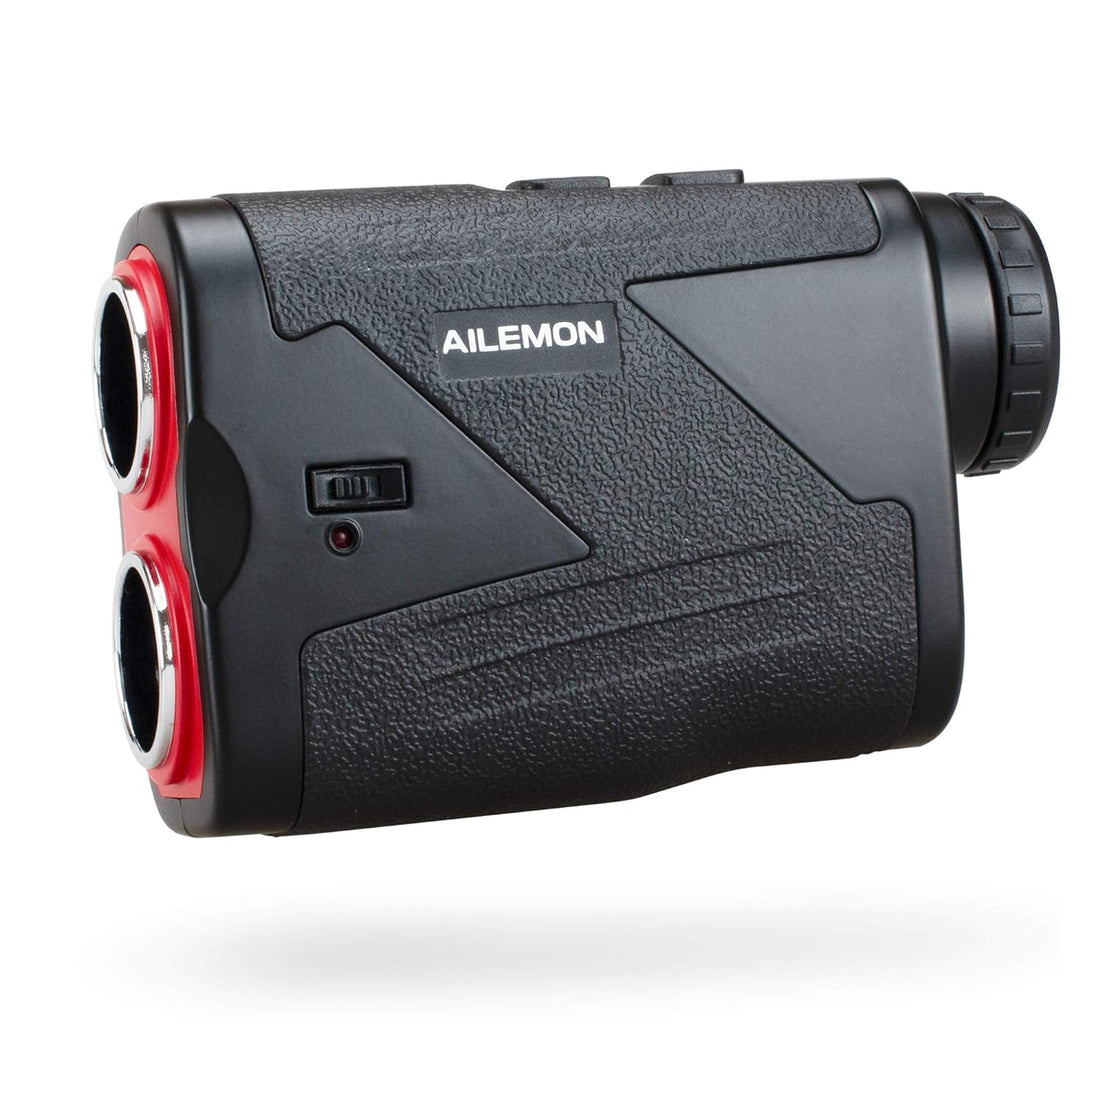 AILEMON 6X Golf Range Finder, 1000/1200 Yard Laser RangeFinder with Slope Switch, Scan, Flagpole Lock, and Speed Function, Tournament Legal Golf Rangefinder